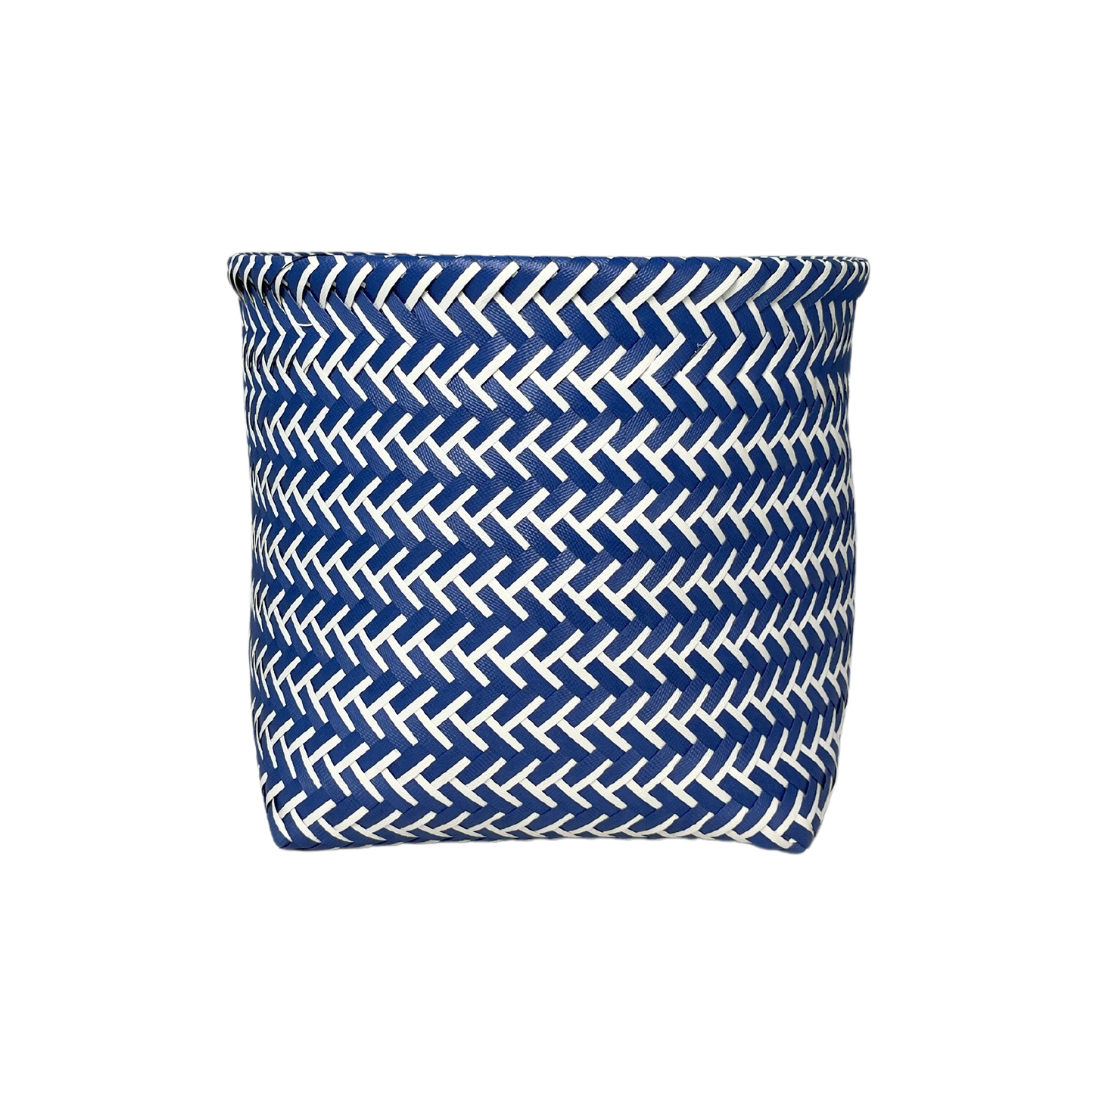 Blue Woven Basket